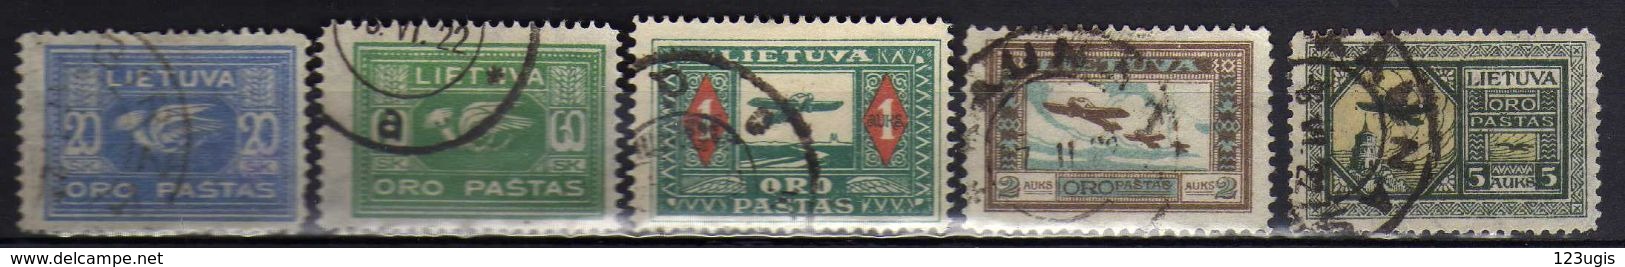 Litauen / Lietuva, 1921,  Mi 102; 104; 106--108, Gestempelt, Flugpost / Air Mail [280118XXII] - Lithuania